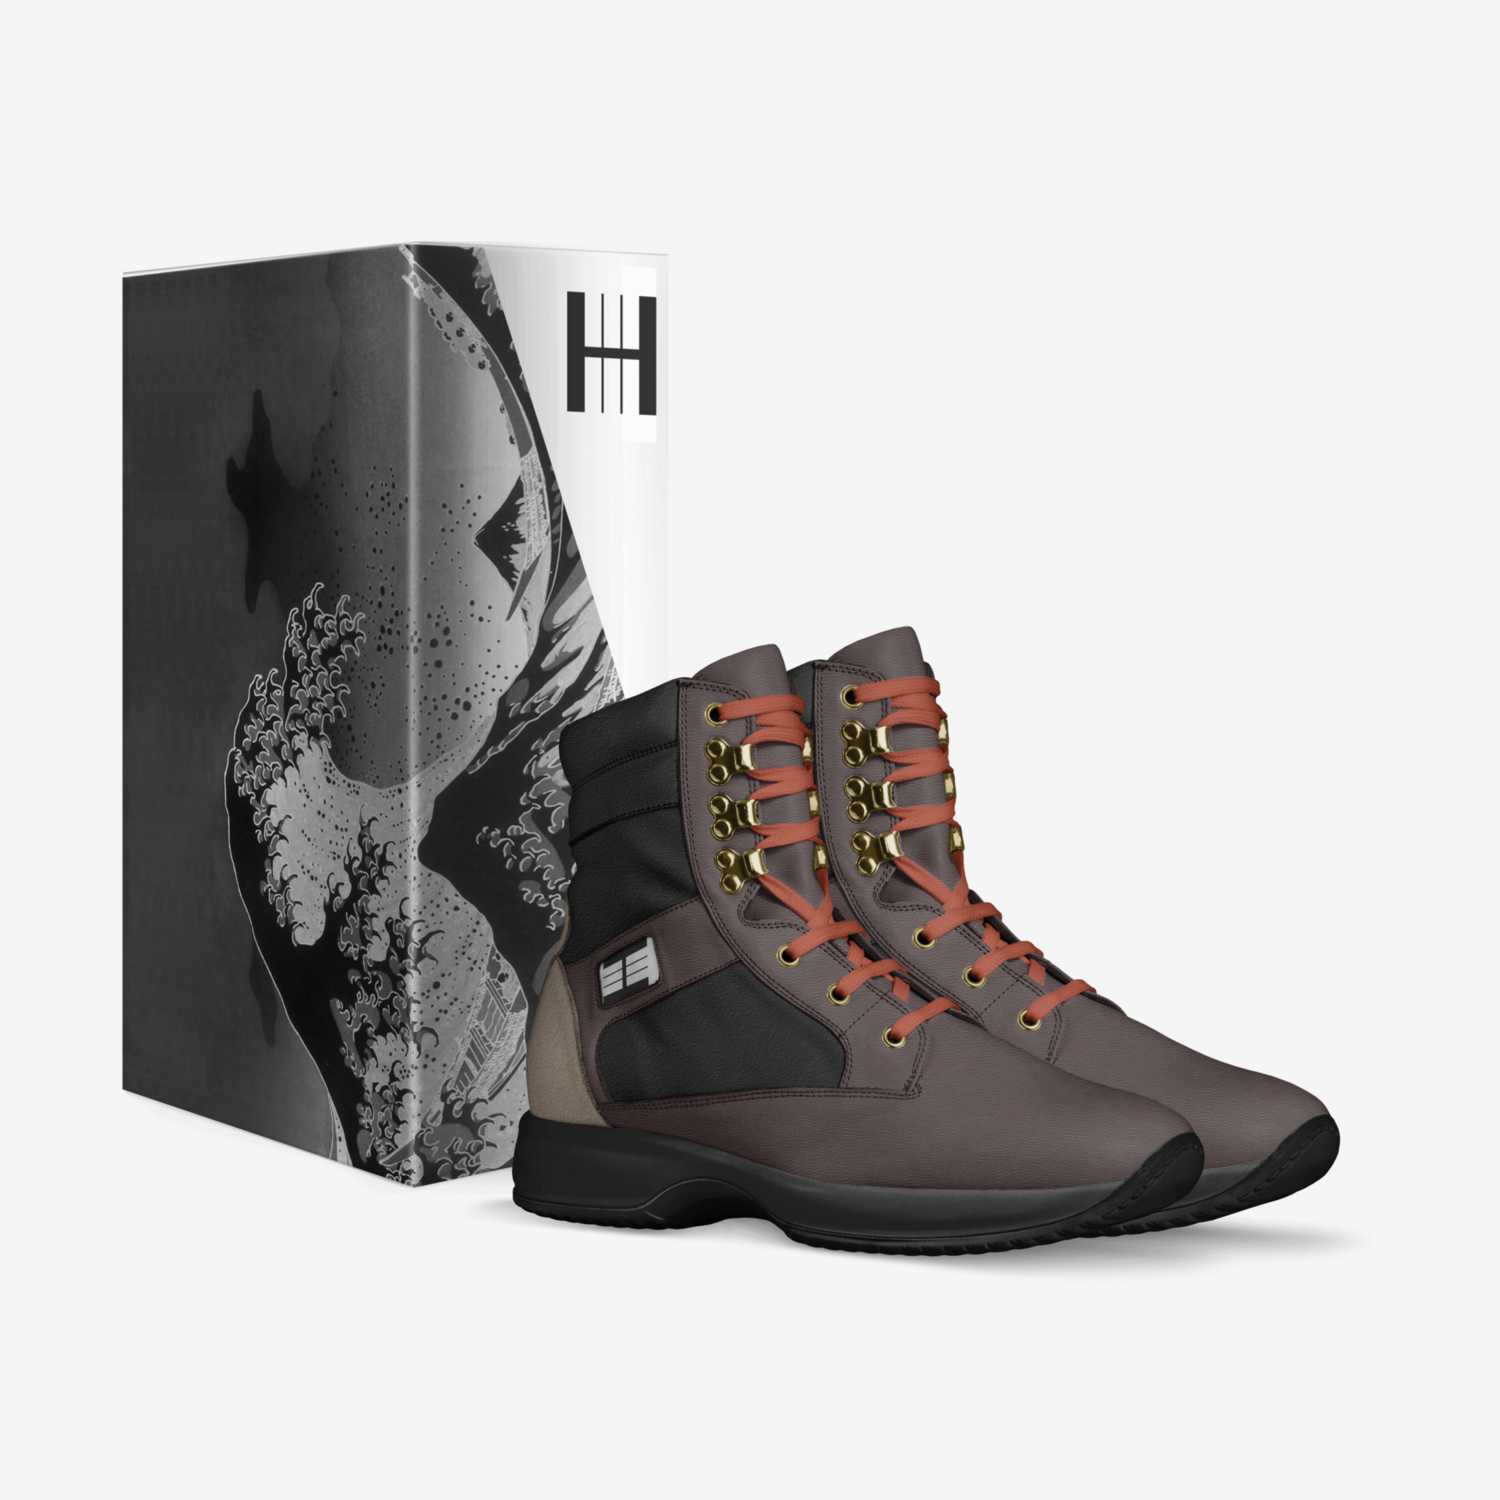 EEHobbs custom made in Italy shoes by Elijah E Hobbs | Box view